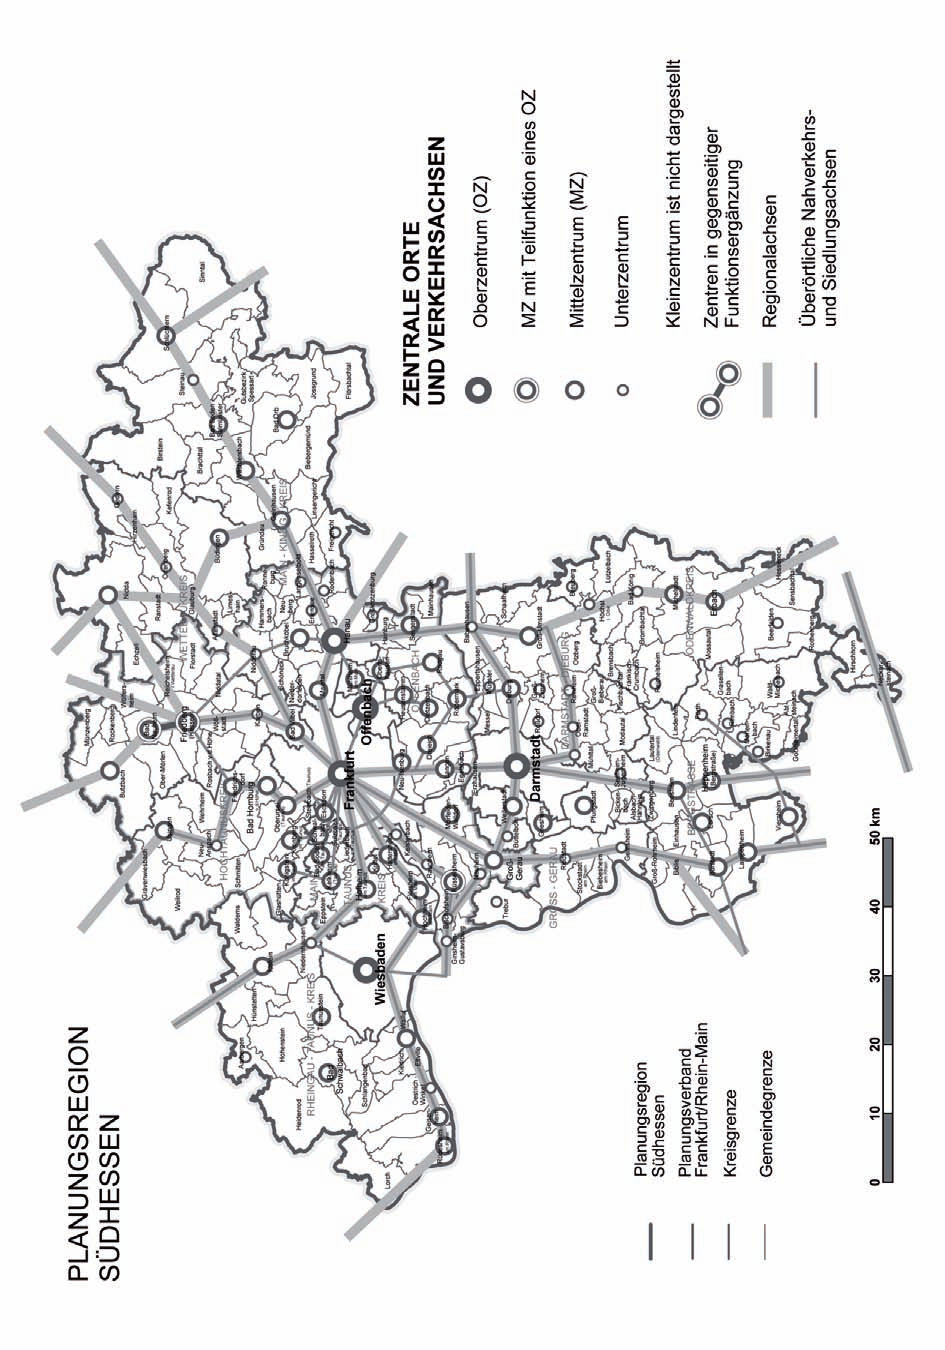 Abbildung 5: Zentrale Orte Regionaler